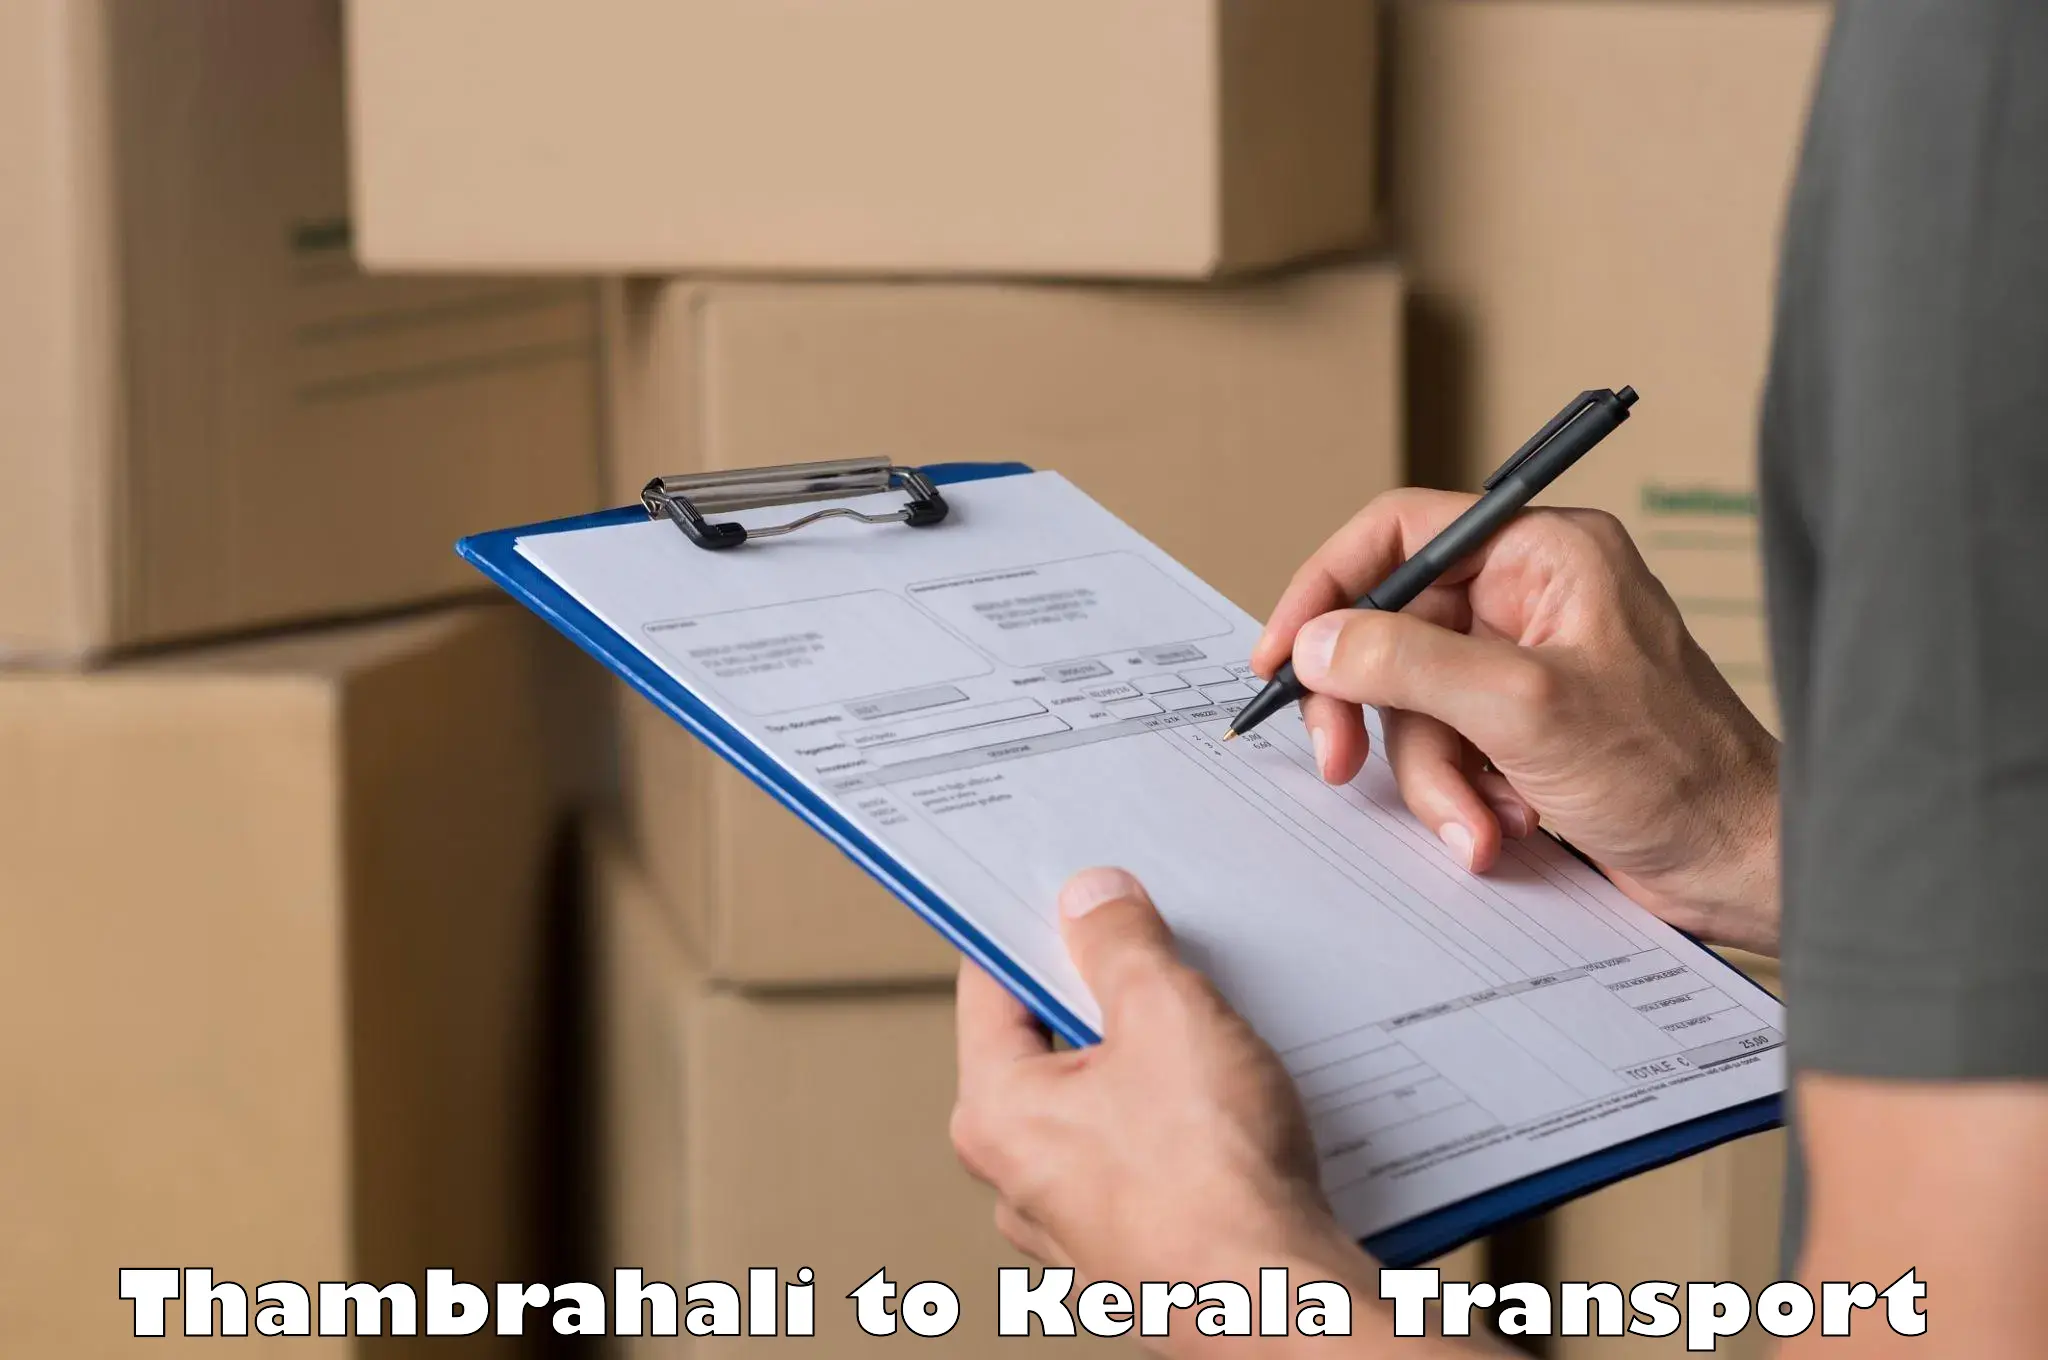 Truck transport companies in India Thambrahali to Kerala